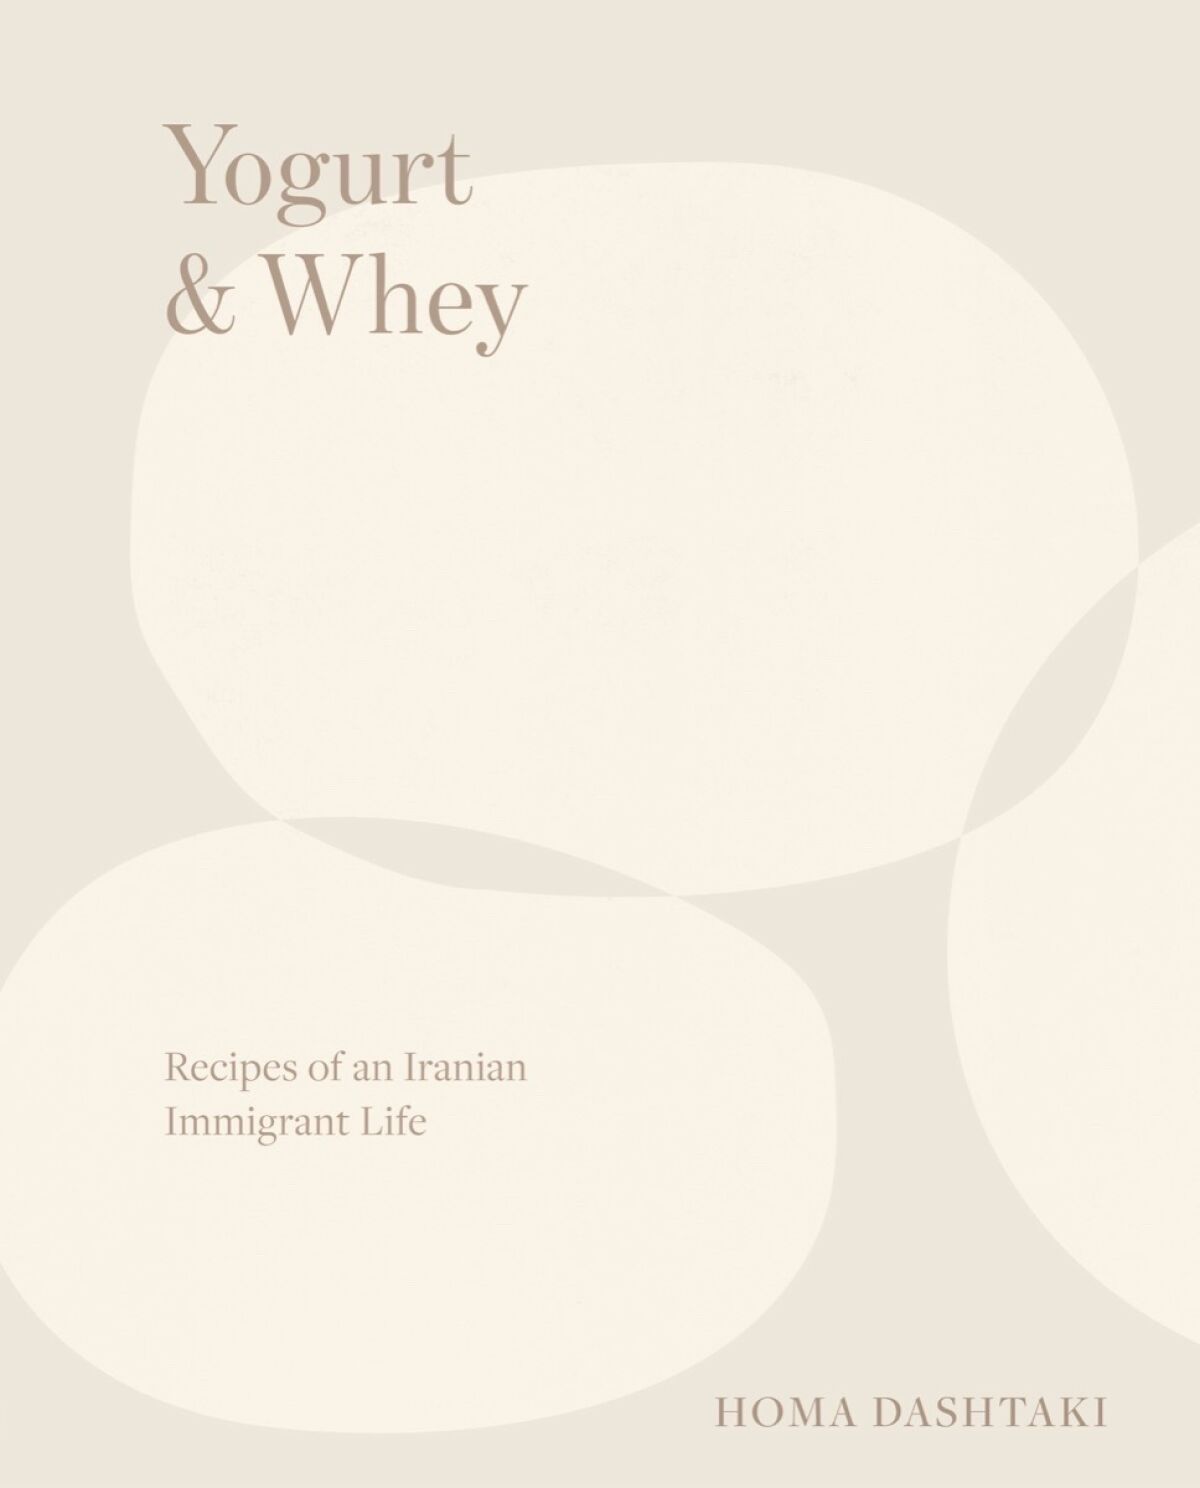 The cover of Homa Dashtaki's "Yogurt & Whey"